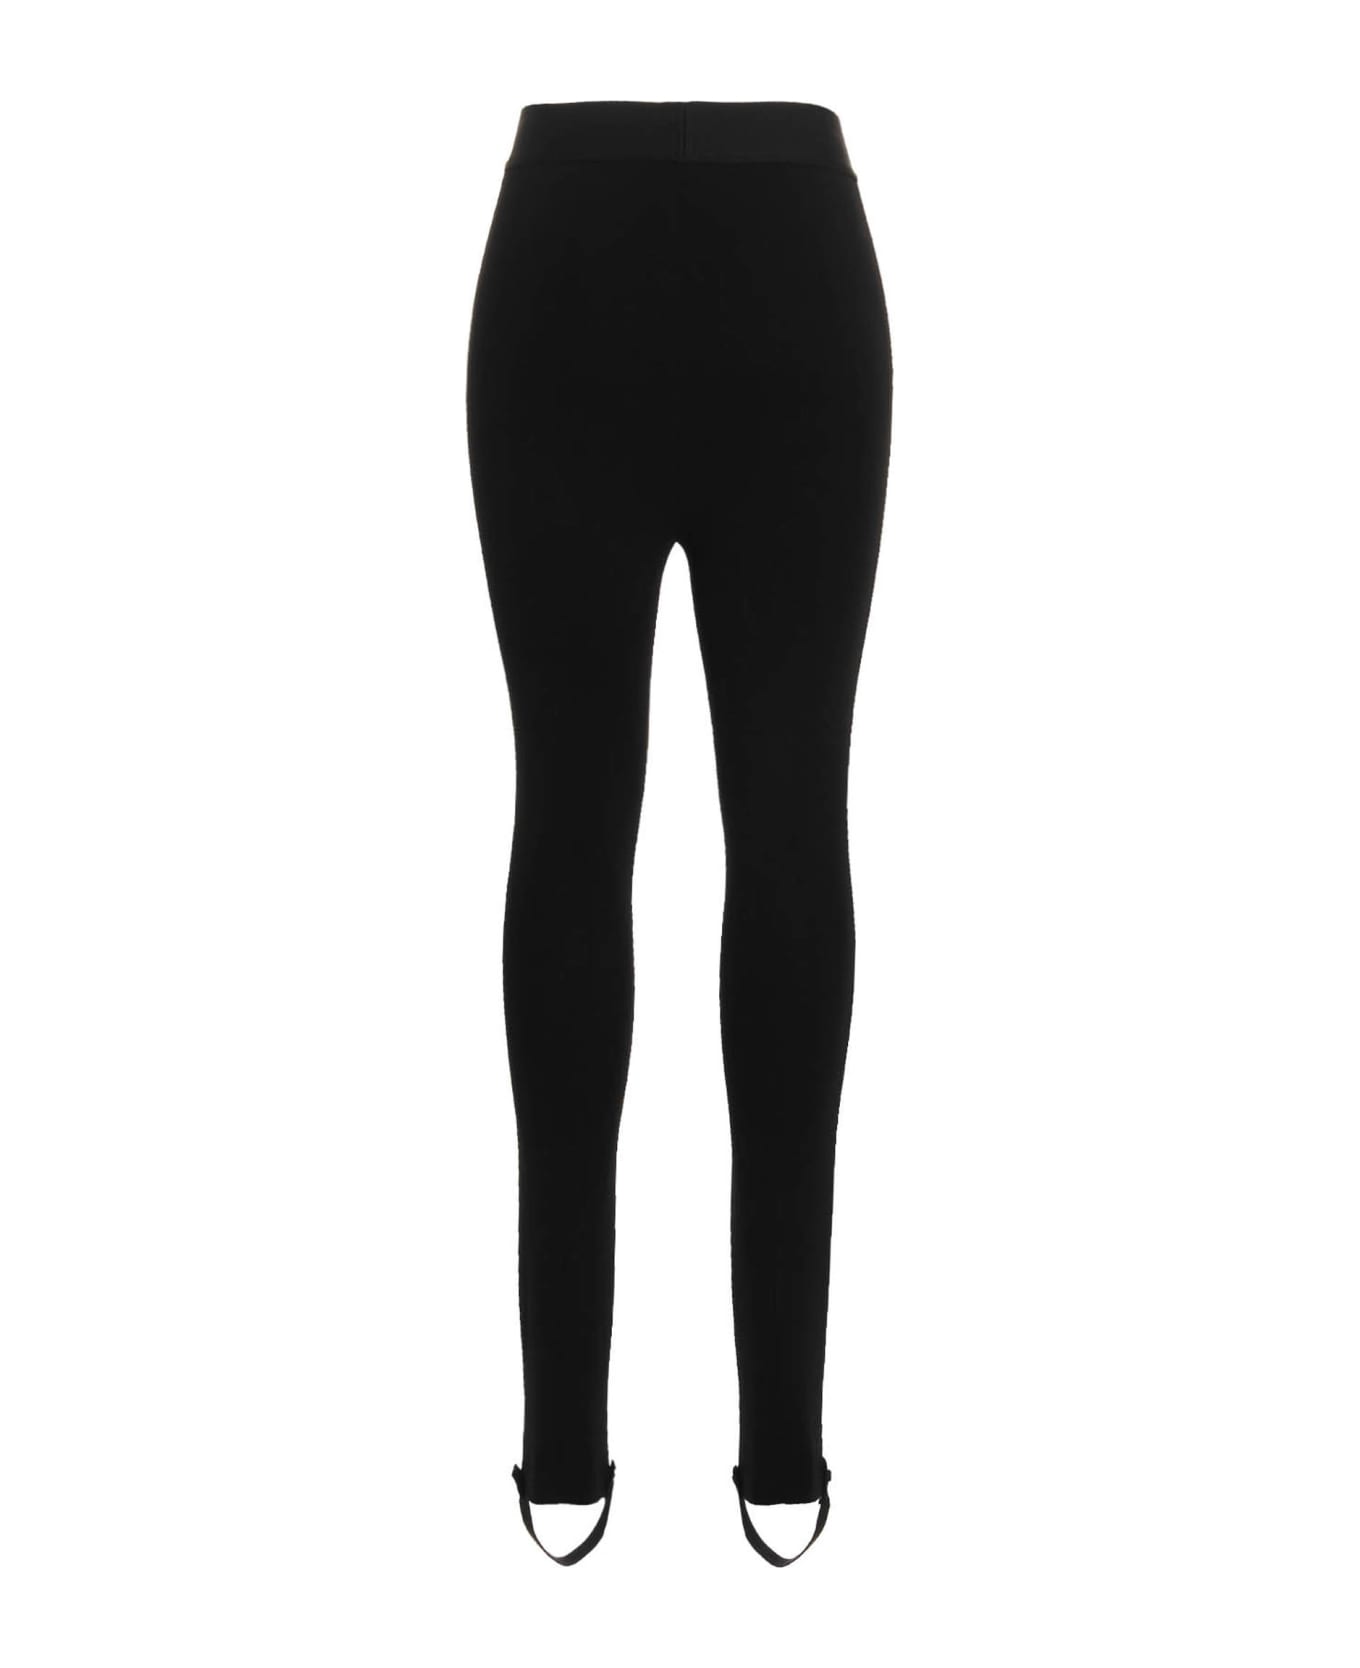 Dolce & Gabbana Logo Leggings - Black  